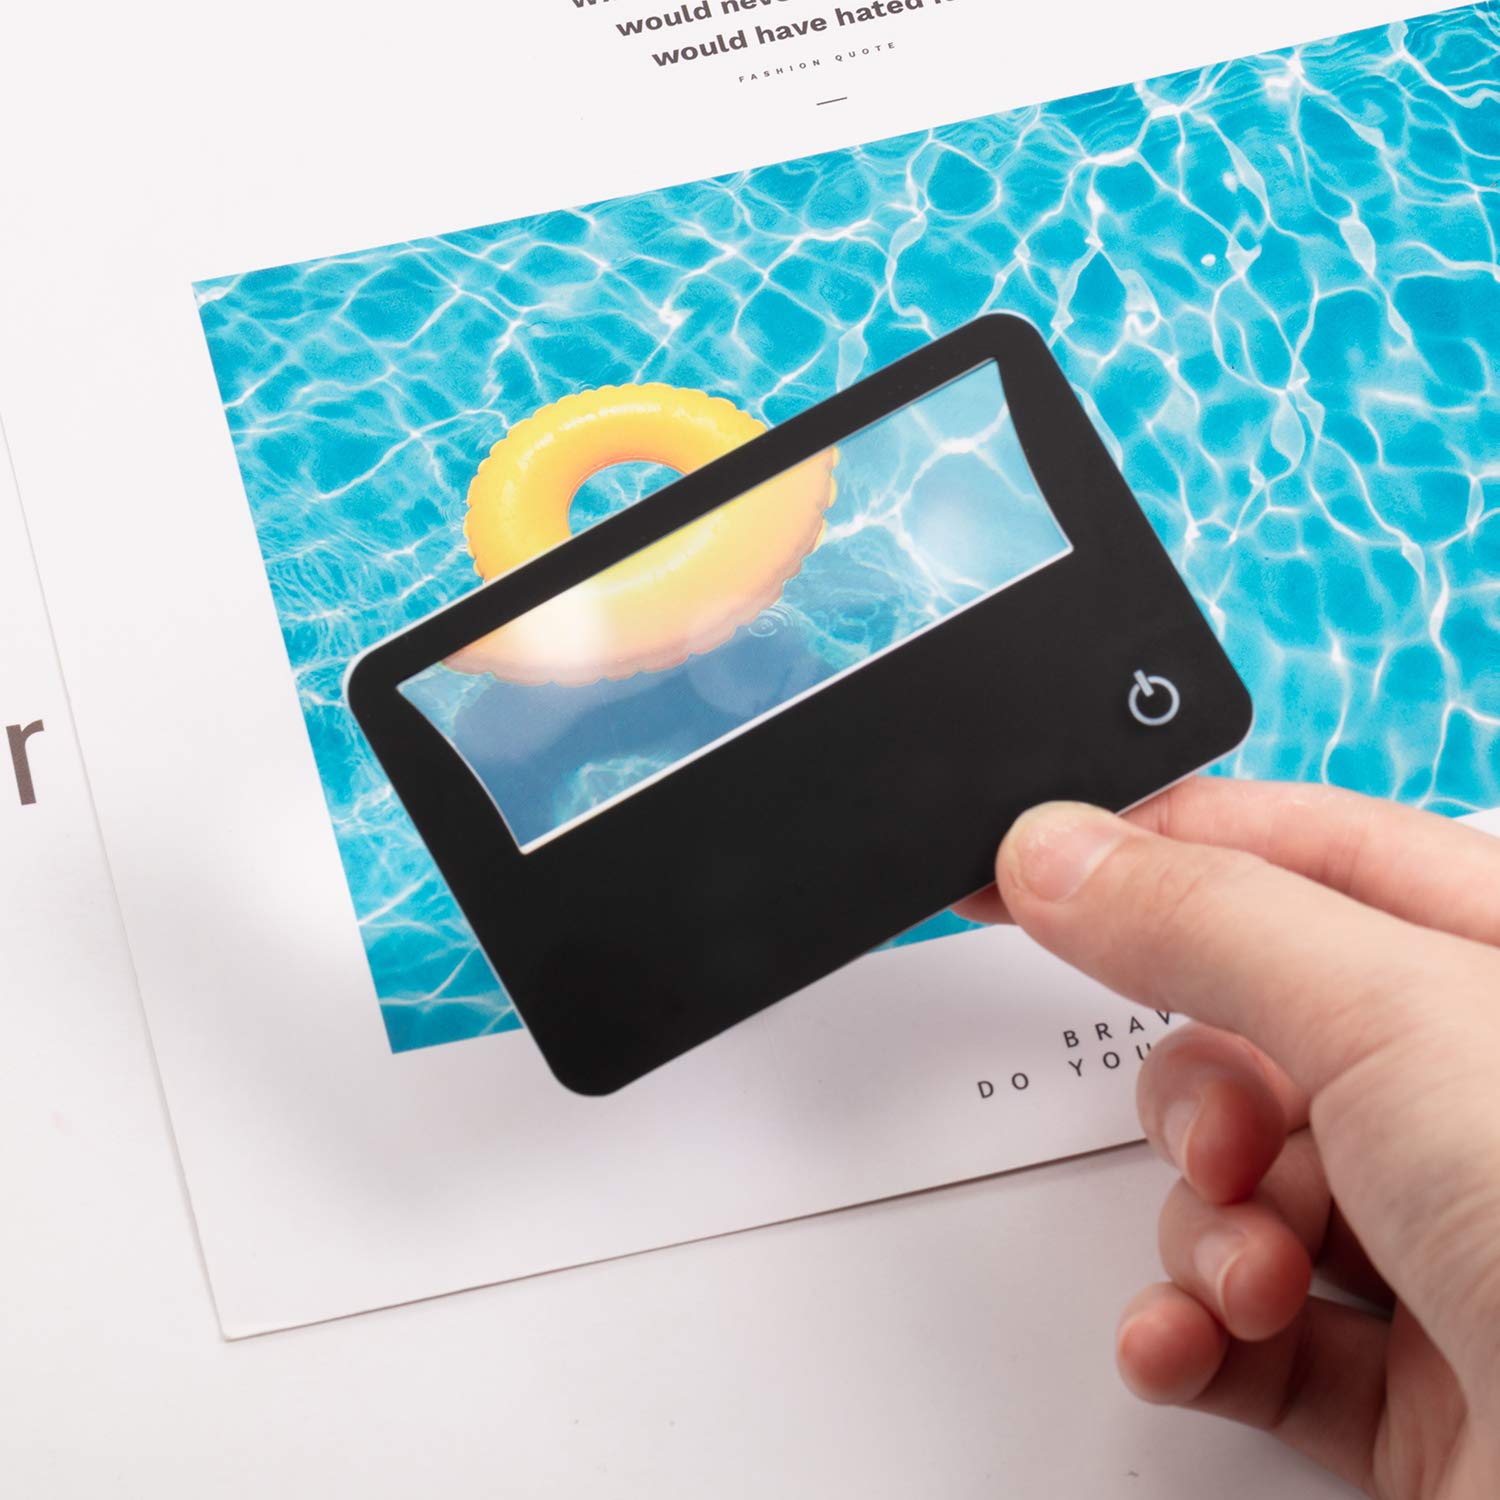 8 Pieces Credit Card Magnifier Bundle Wallet Purse Magnifying Glass LED Illuminated Magnifier 3X Pocket Card (Black)